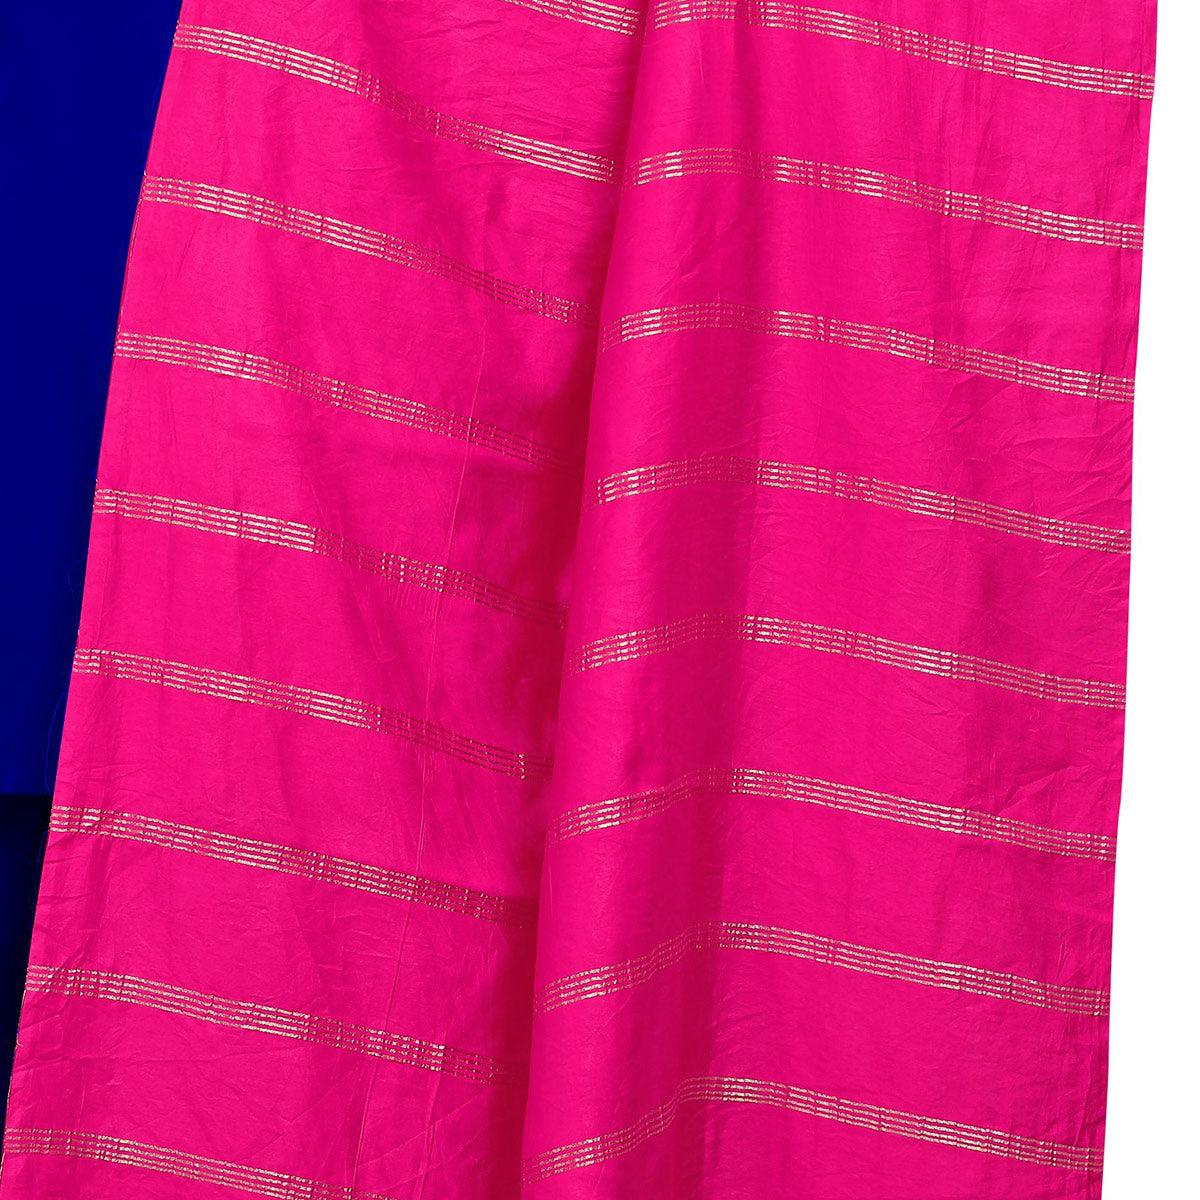 Sensational Pink Colored Festive Wear Cotton Dupatta - Peachmode